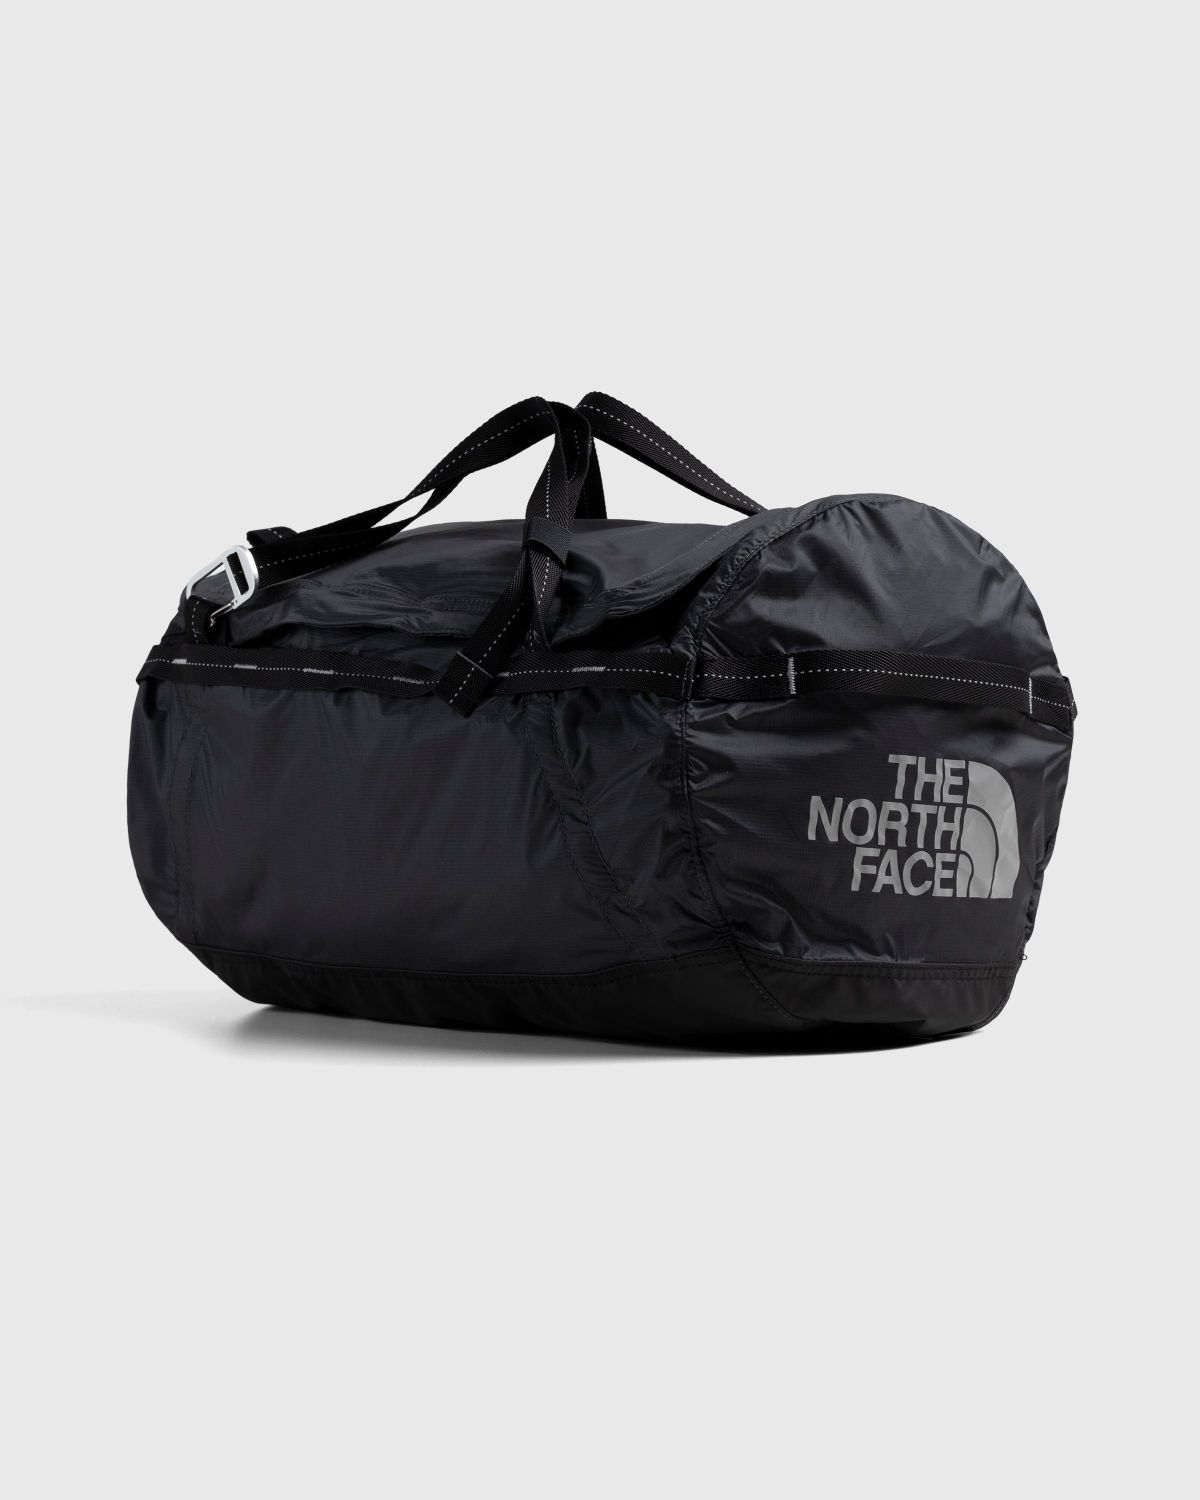 The North Face – Flyweight Duffel Grey/Black - Bags - Grey - Image 1